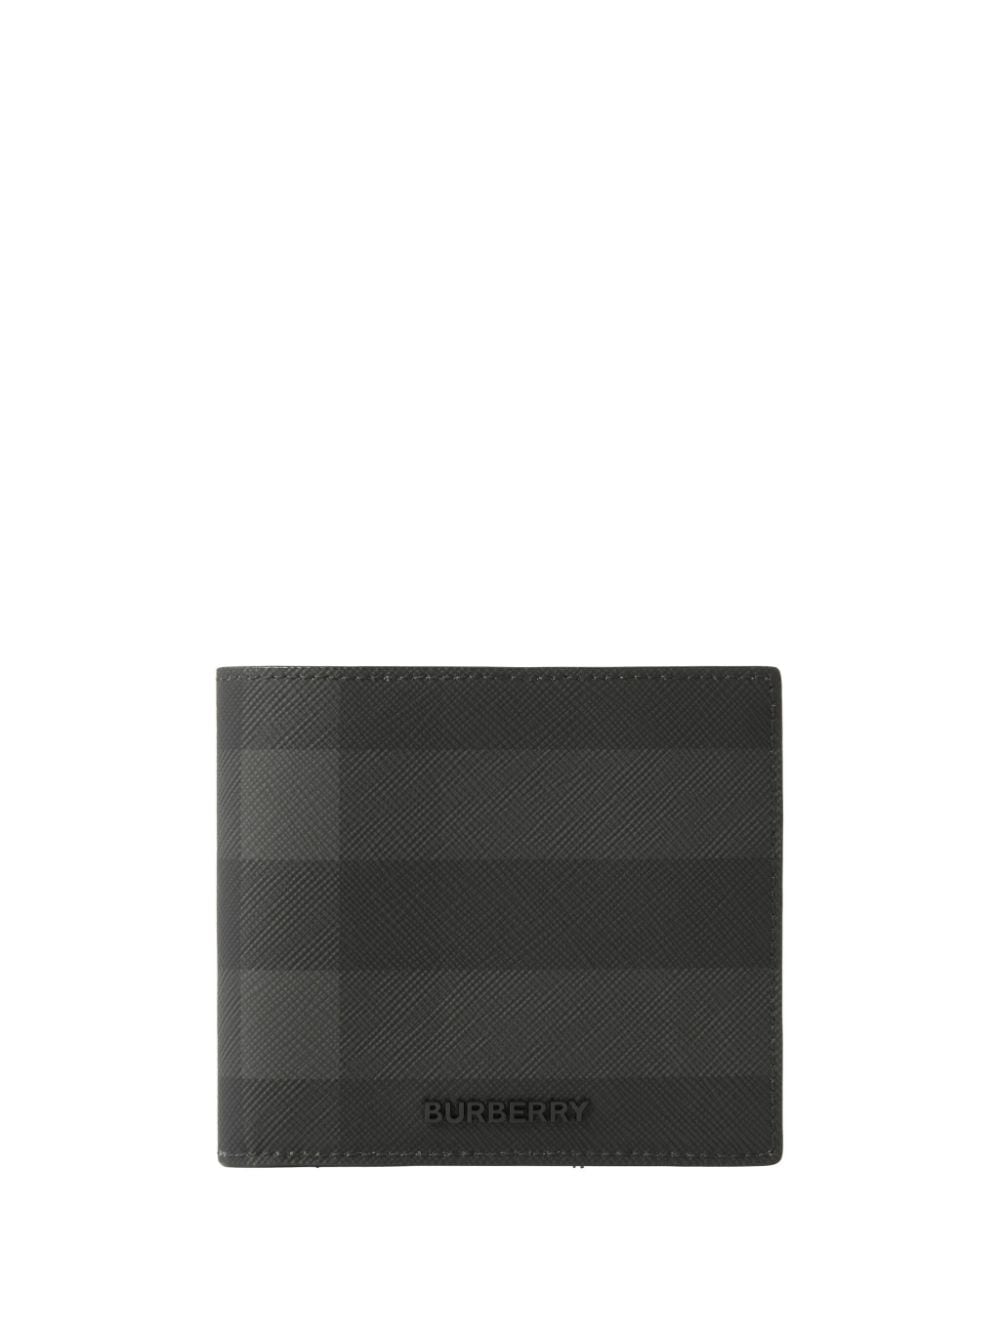 Burberry checked bi-fold wallet - Black von Burberry